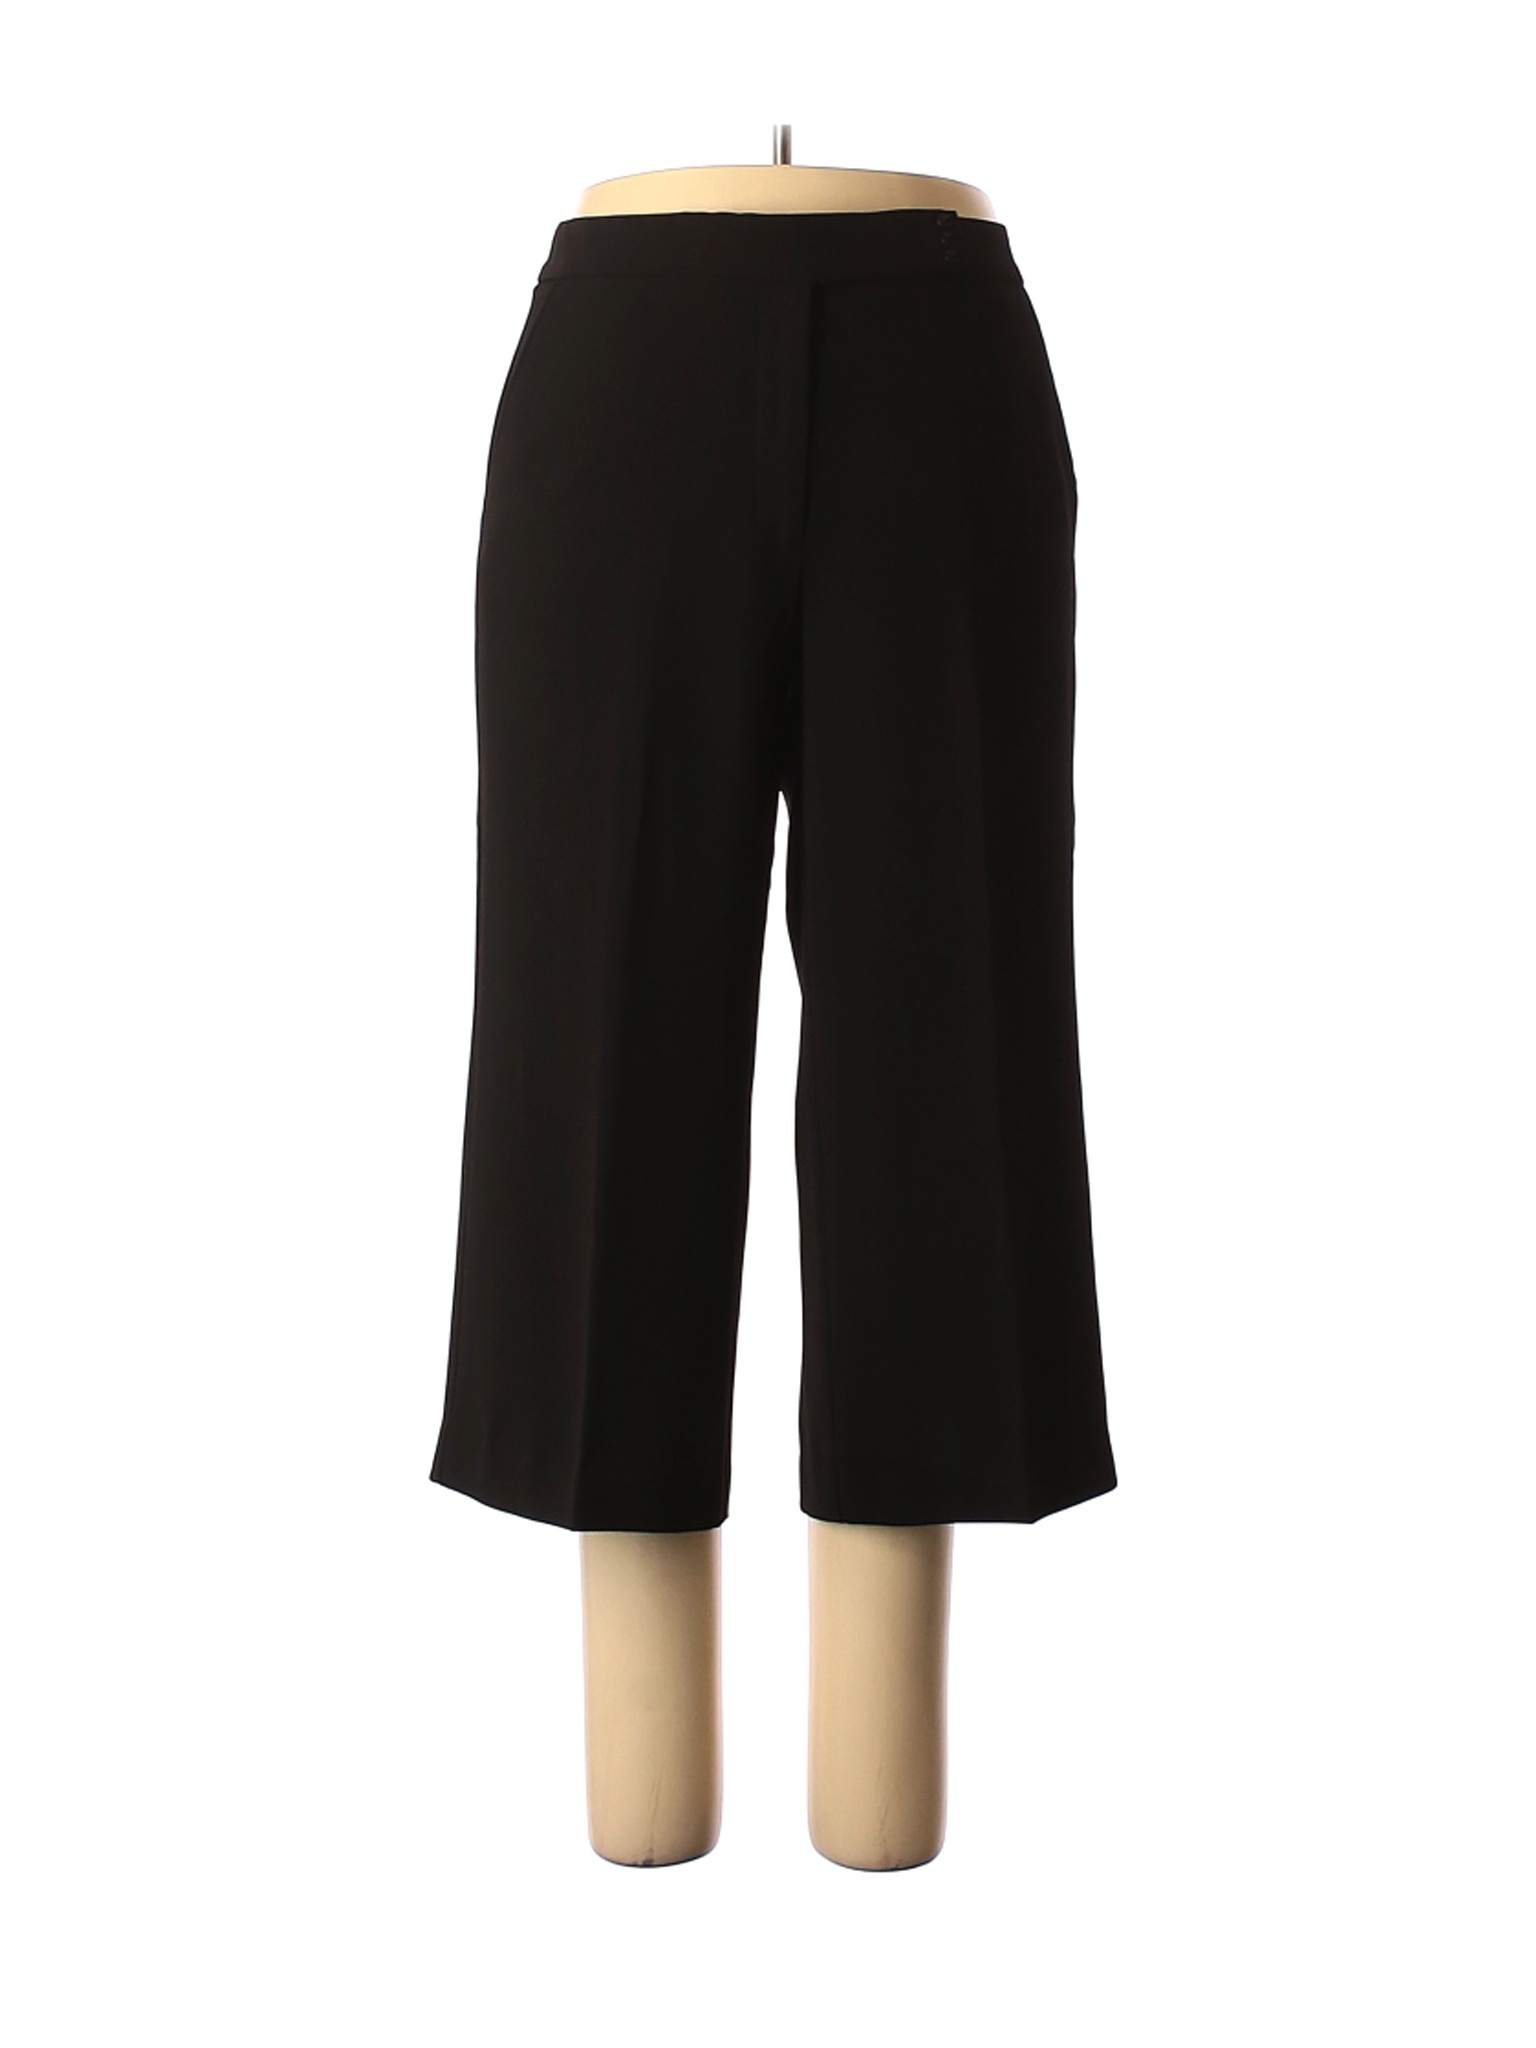 White House Black Market Women Black Dress Pants 10 | eBay